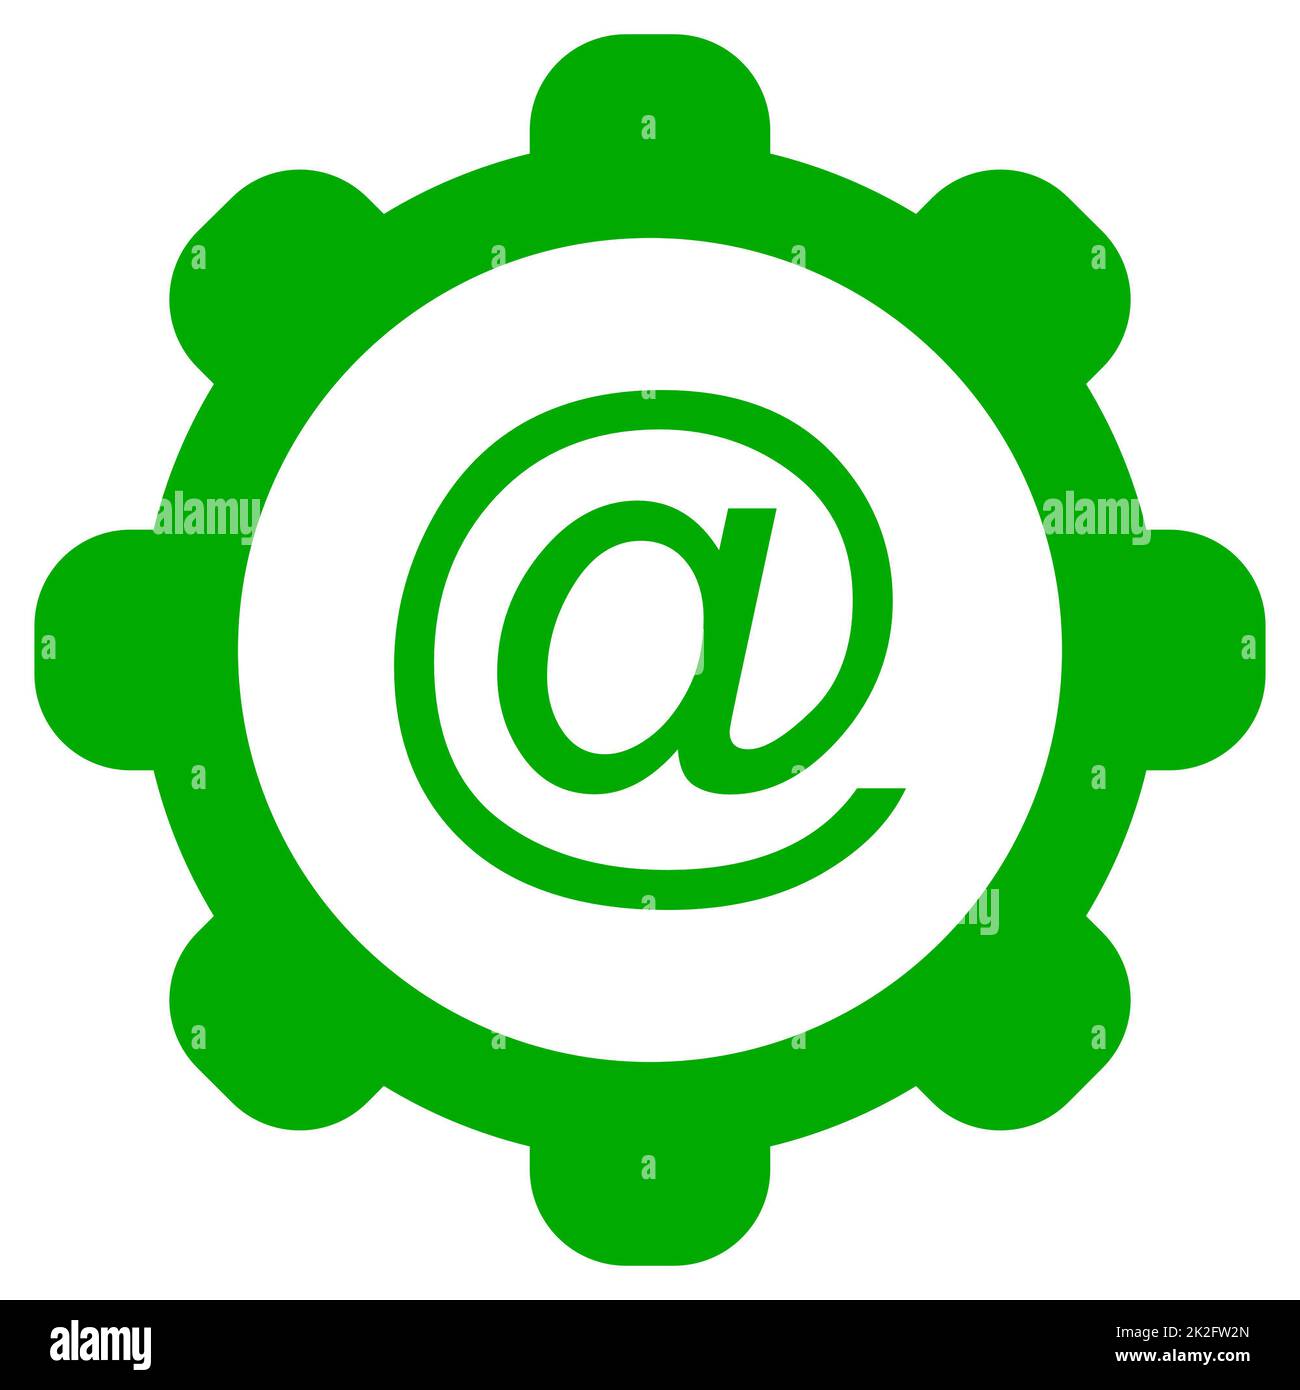 E-mail symbol and wheel Stock Photo